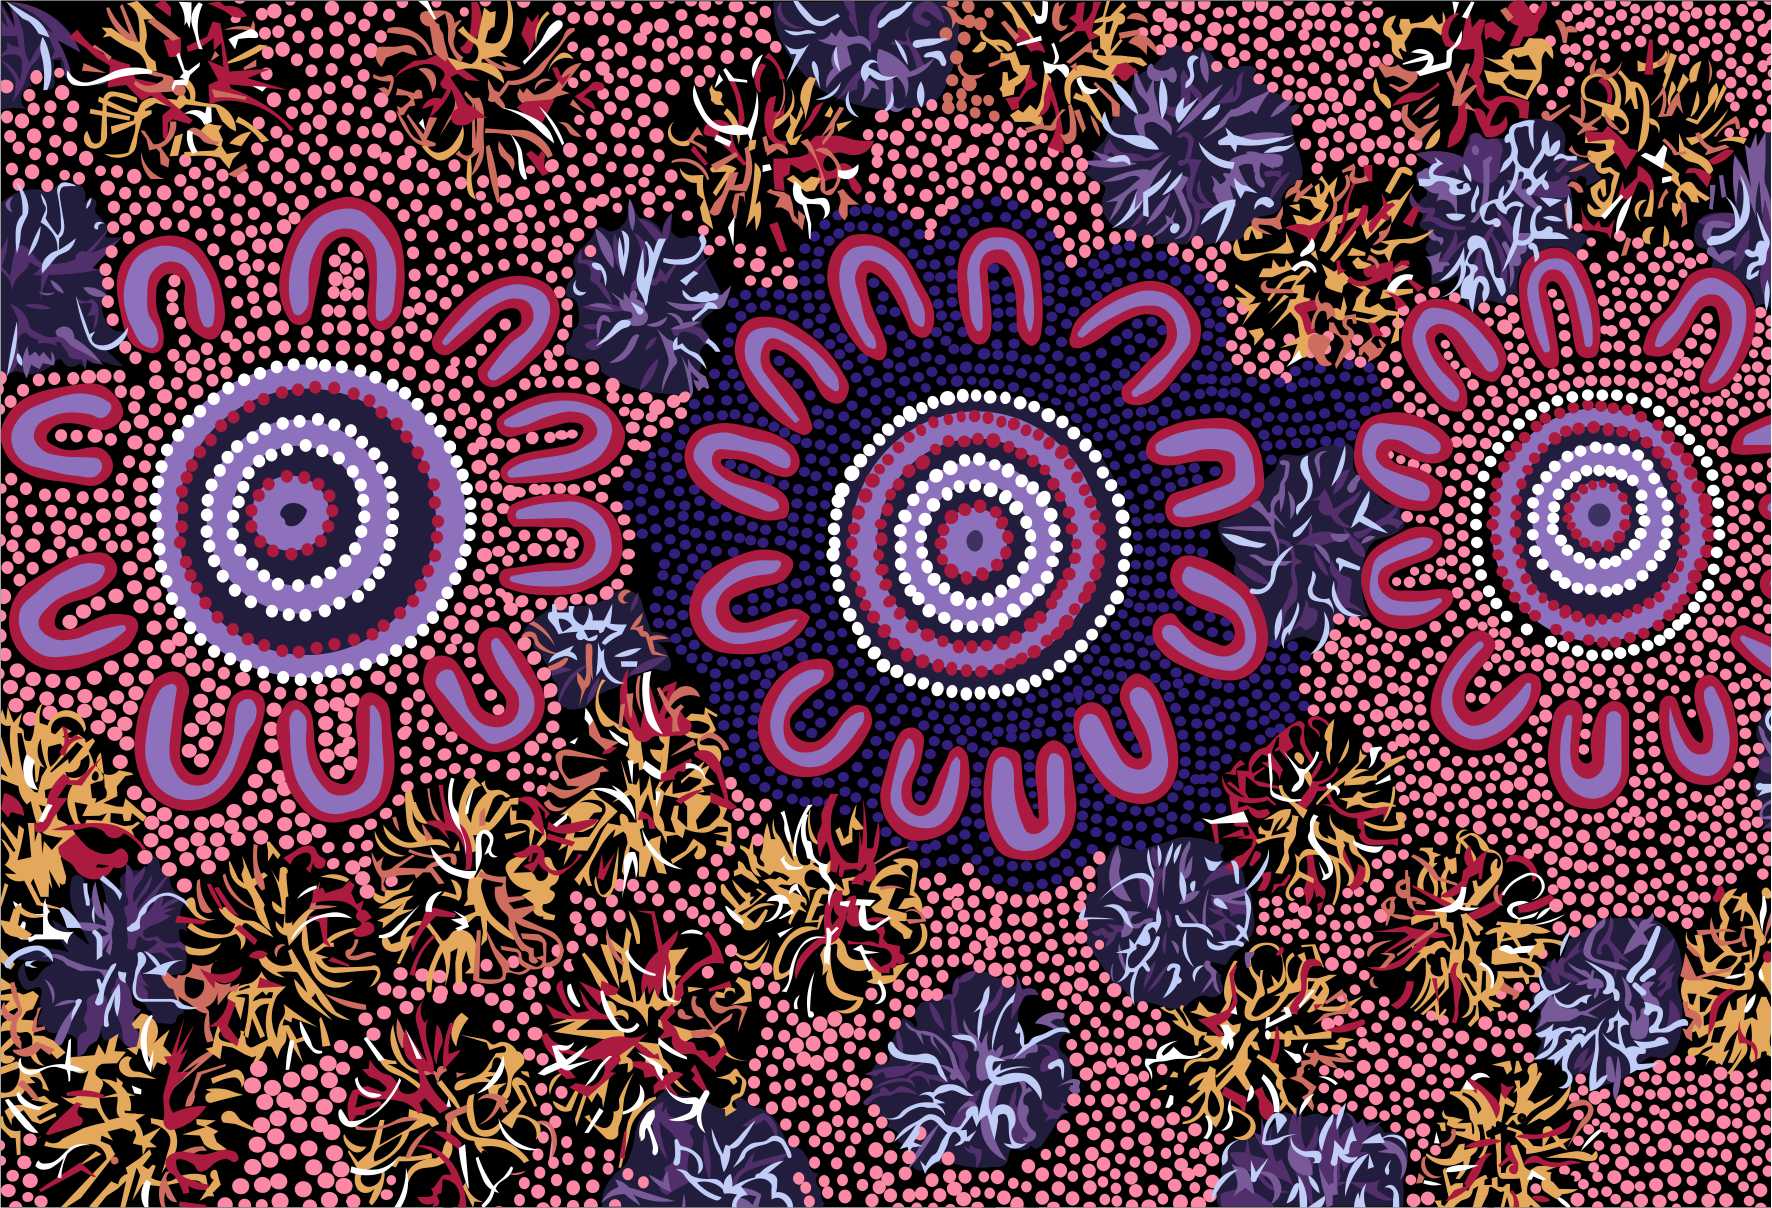 Aboriginal Artist and Graphic Design - Clothing – Aboriginal Art by Lani